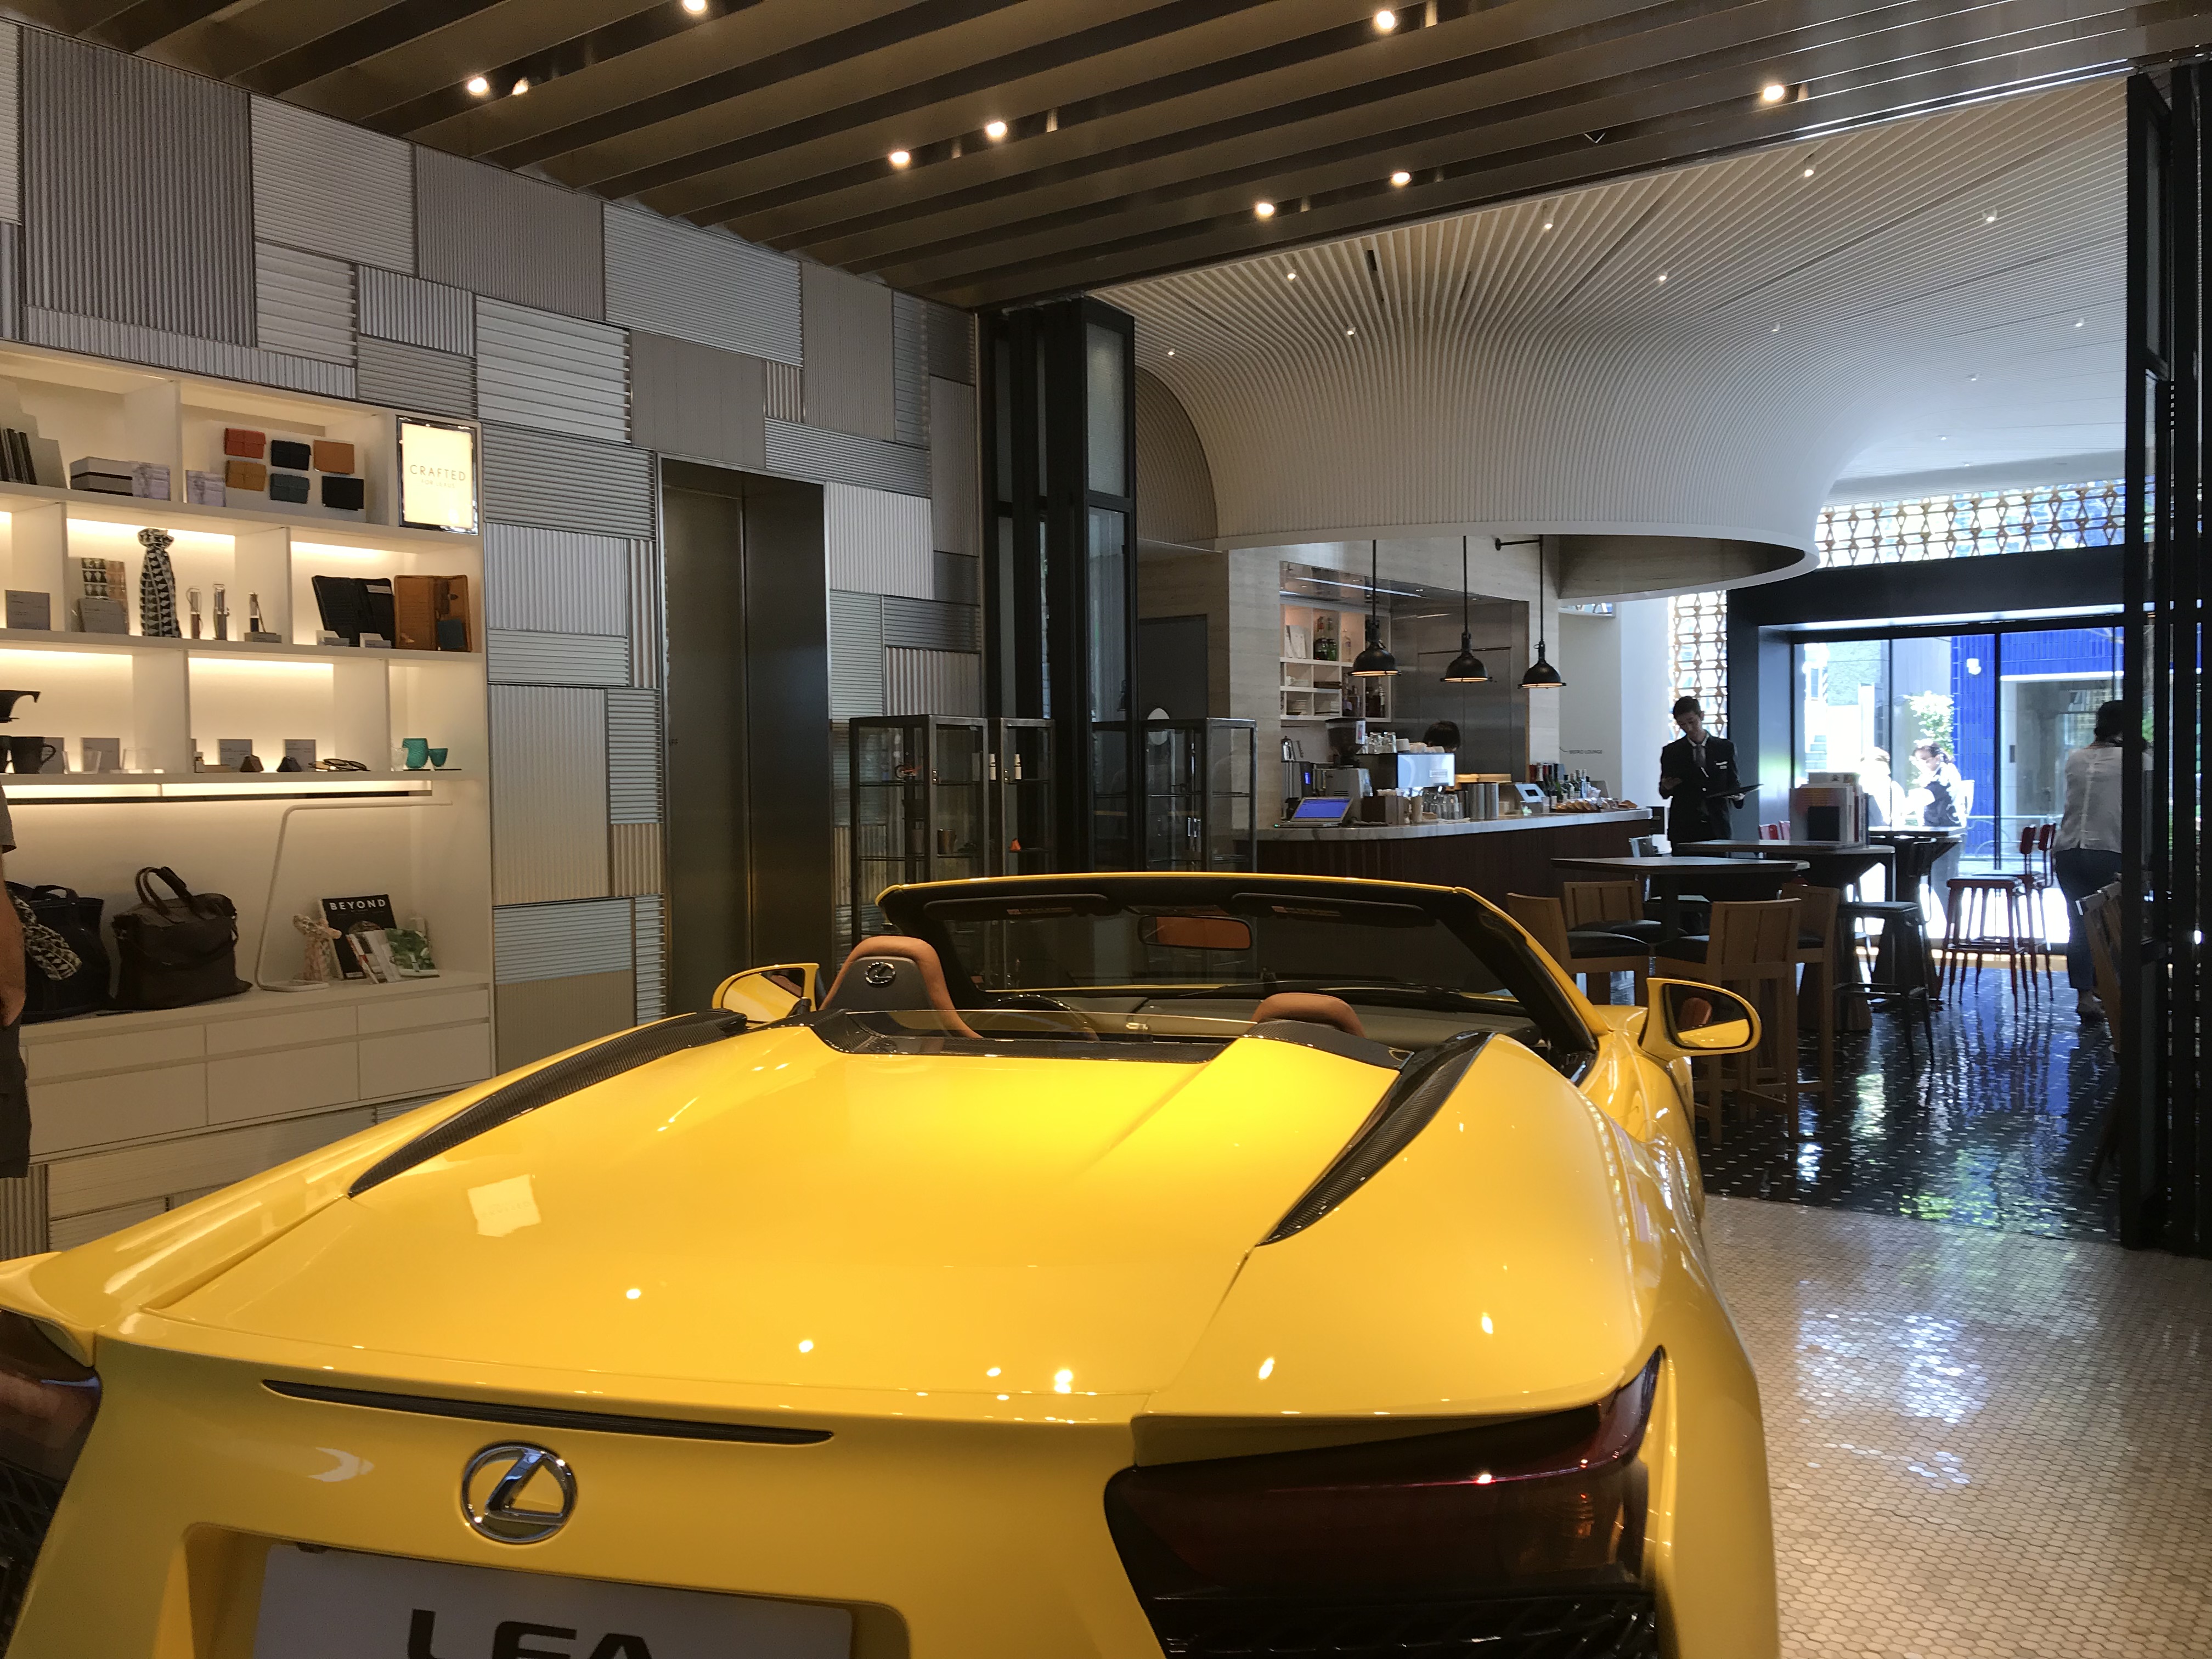 https://www.focus-shopper.fr/wp-content/uploads/2018/09/Intersect-by-Lexus-showroom-et-caf%C3%A9-lounge-Focus-Shopper.jpg